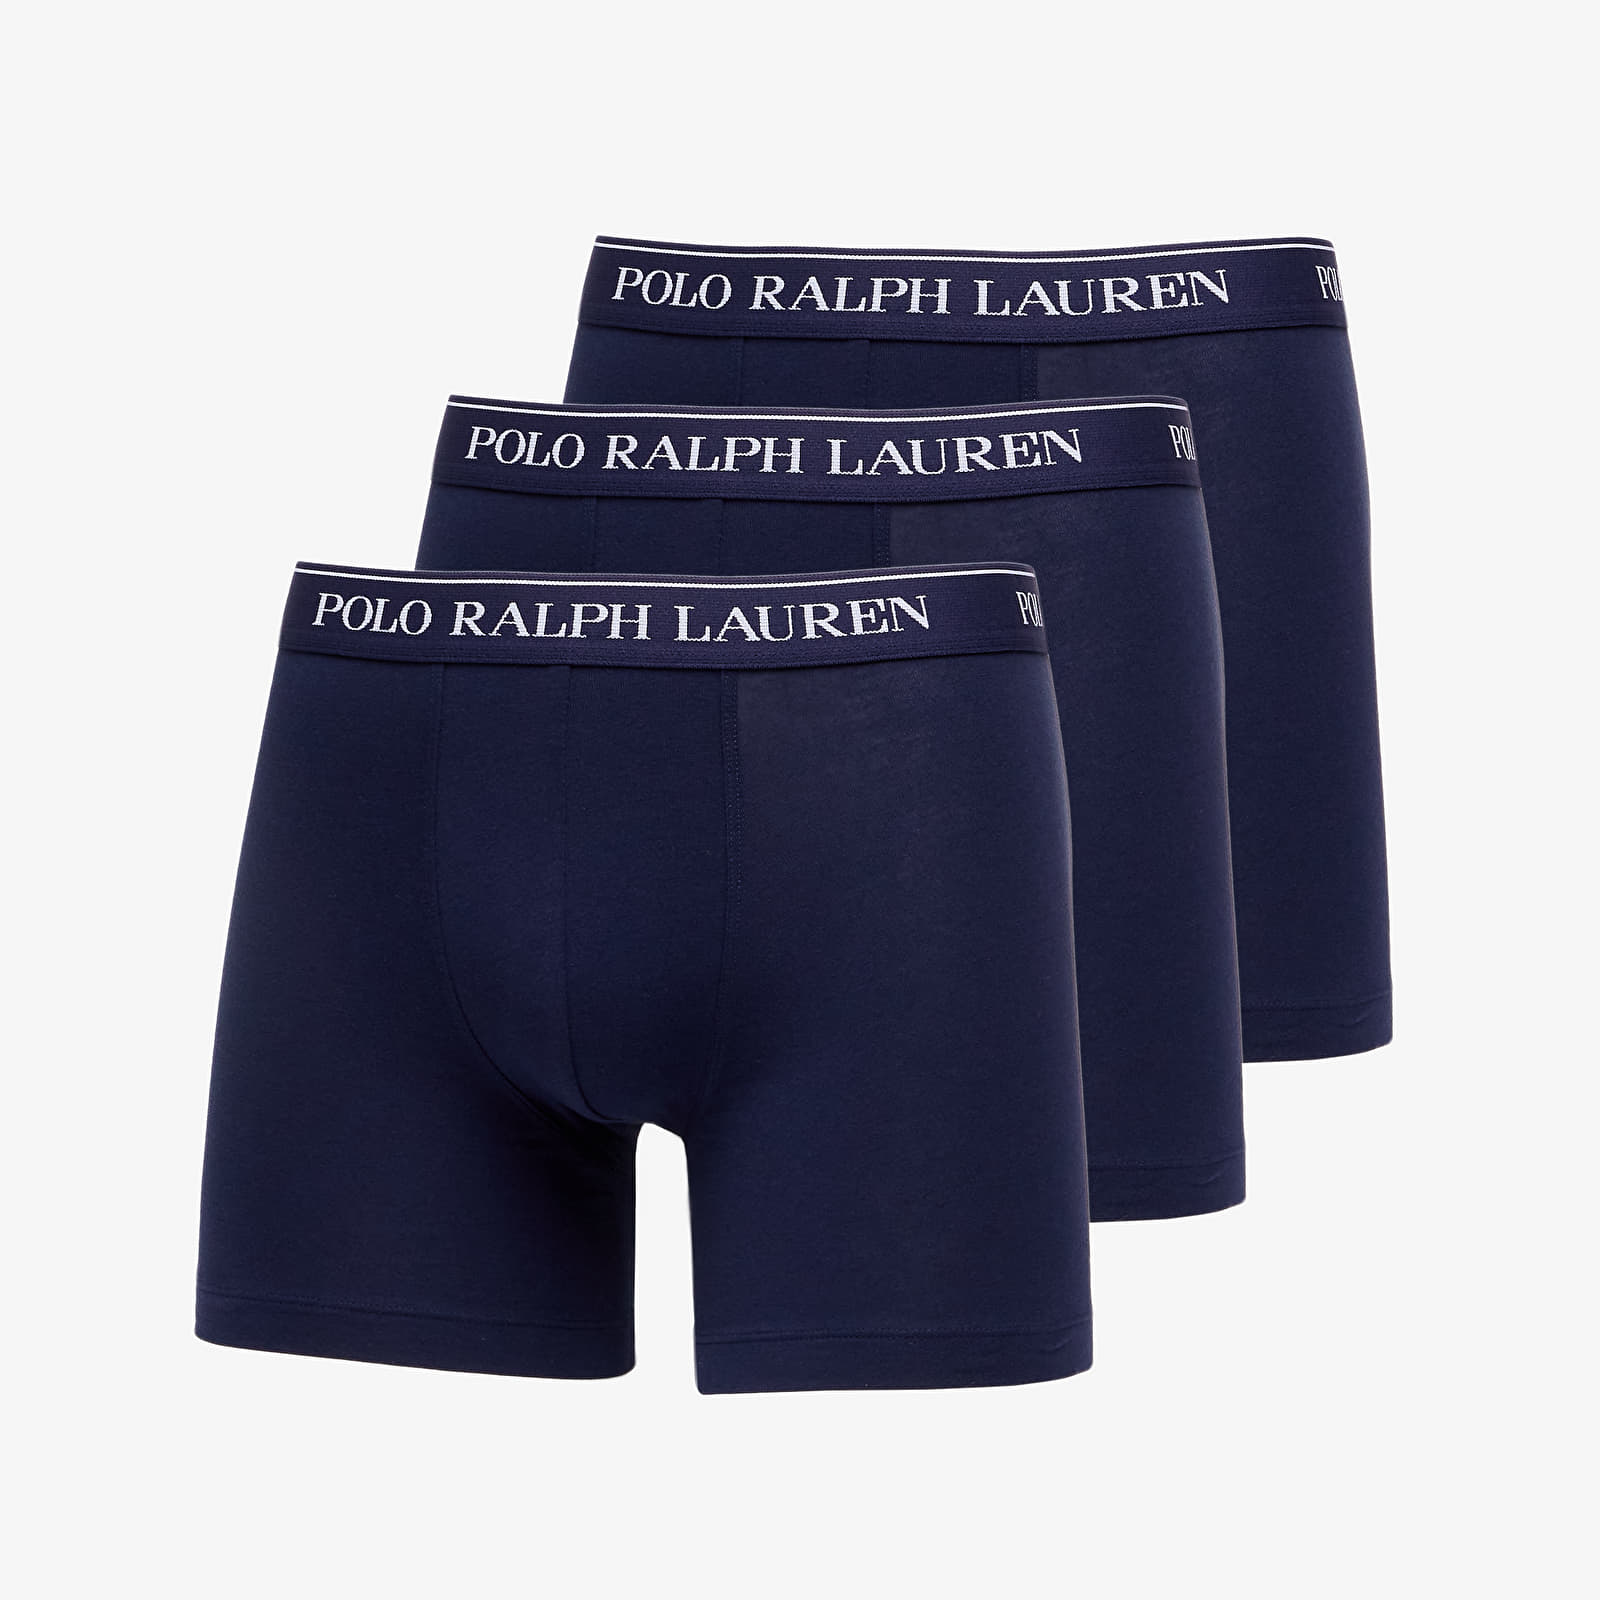 Polo Ralph Lauren Boxer Briefs 3 Pack